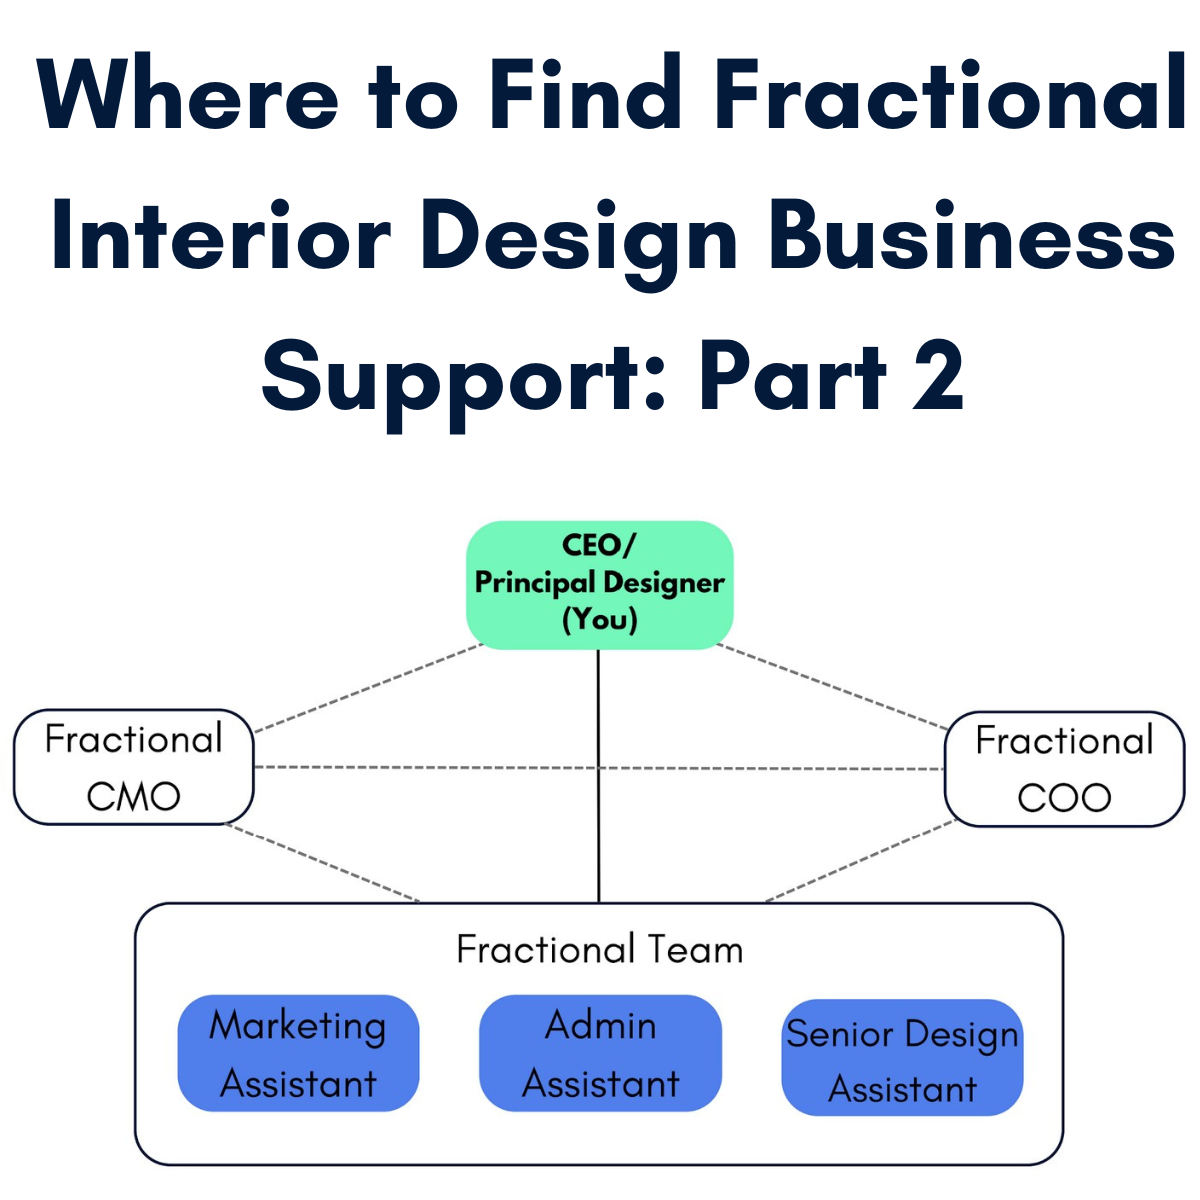 Fractional Interior Design Business Support